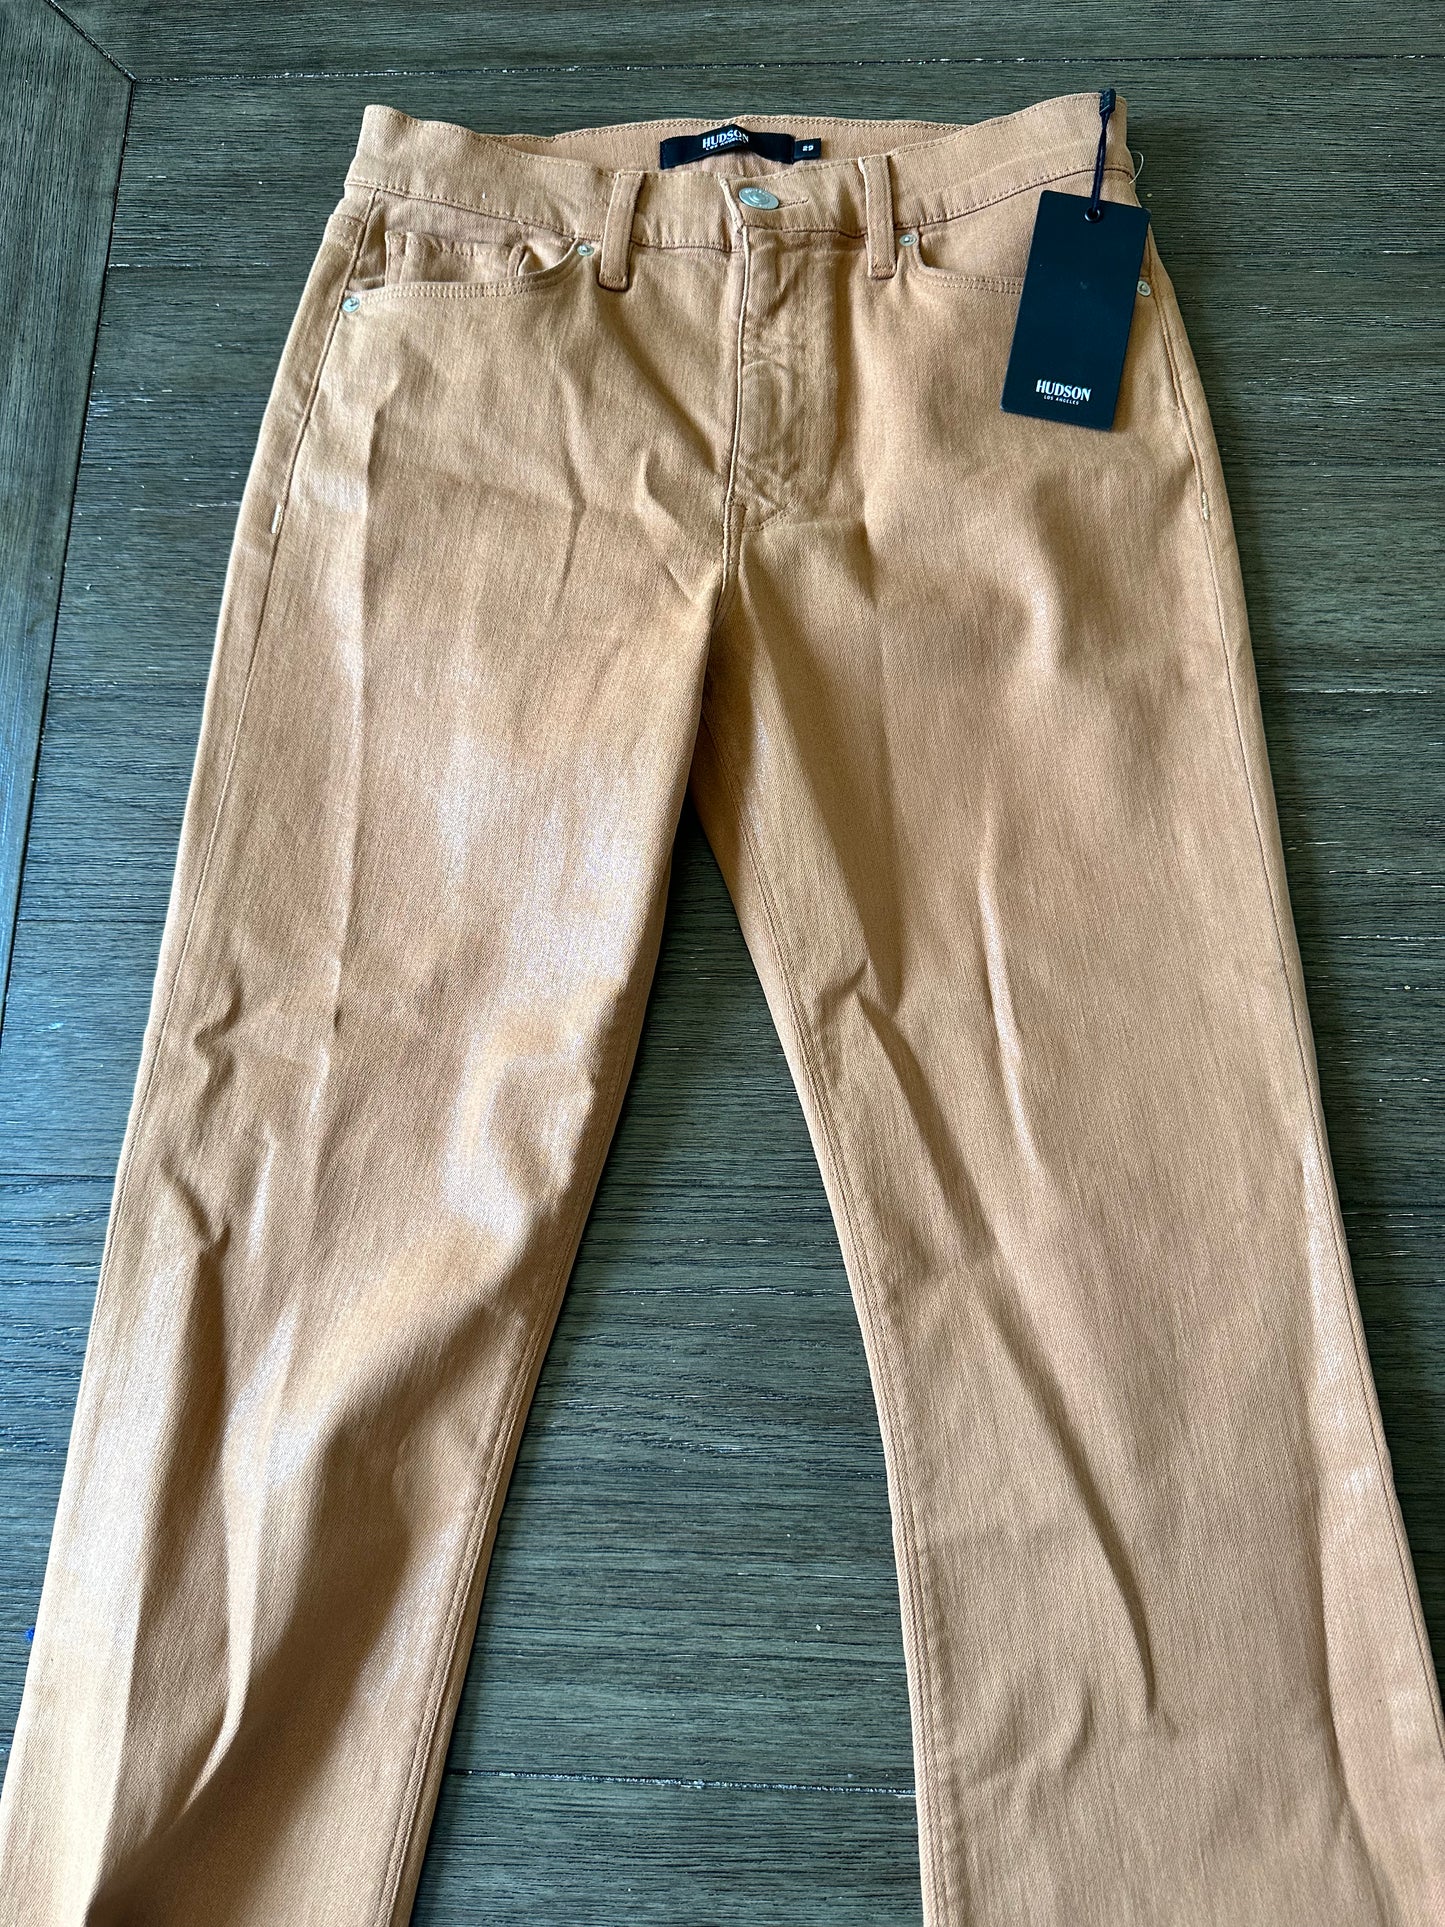 New- Hudson Pants Size 29